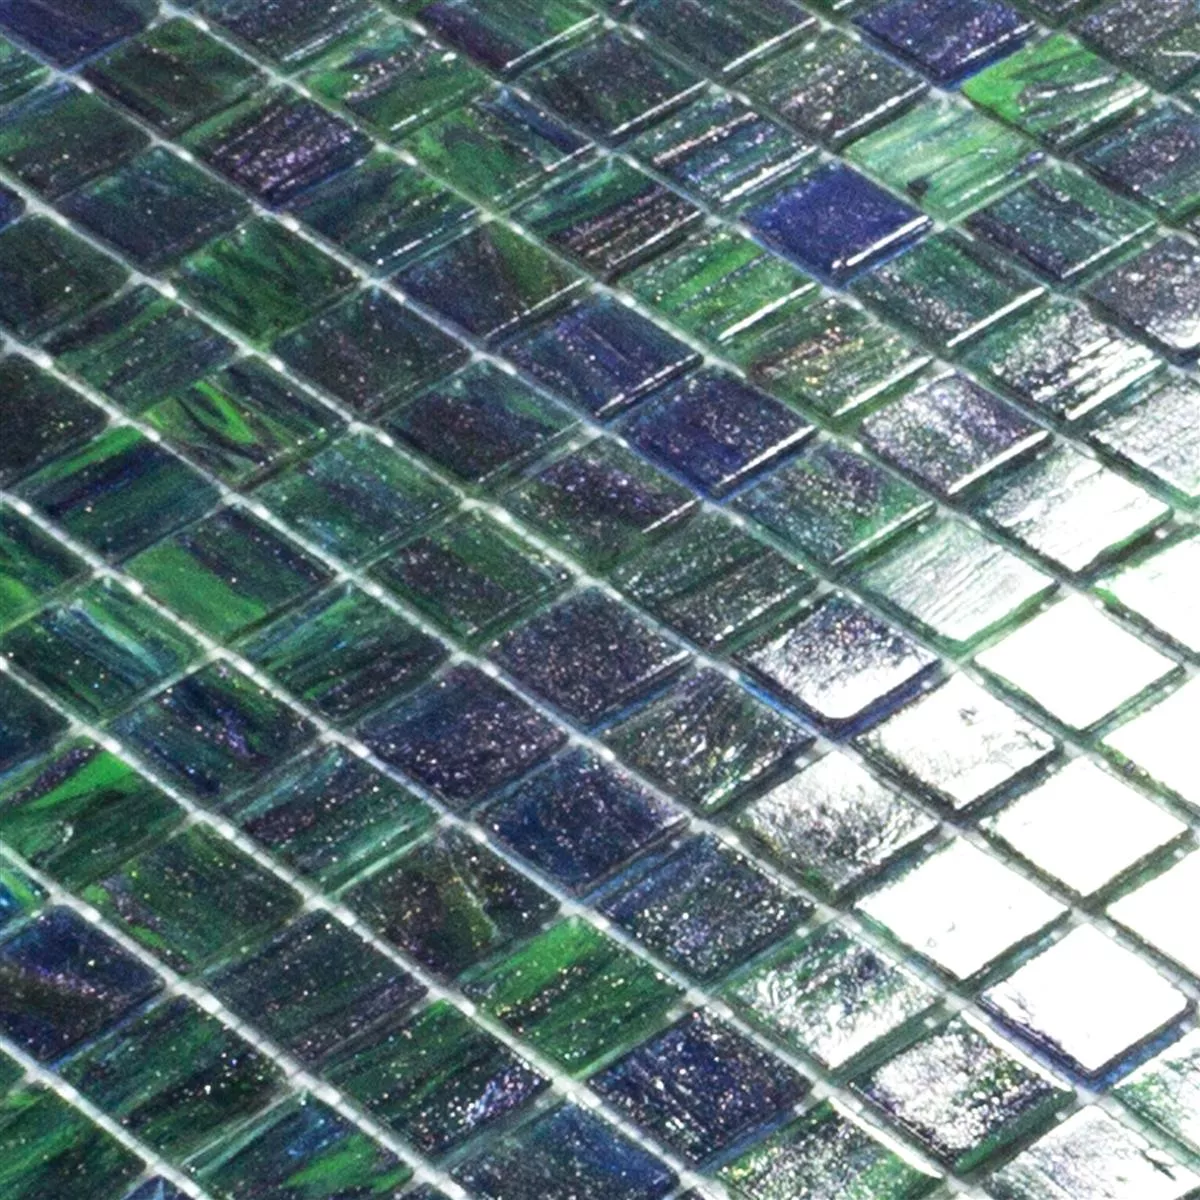 Sample Glass Mosaic Tiles Catalina Blue Green Mix